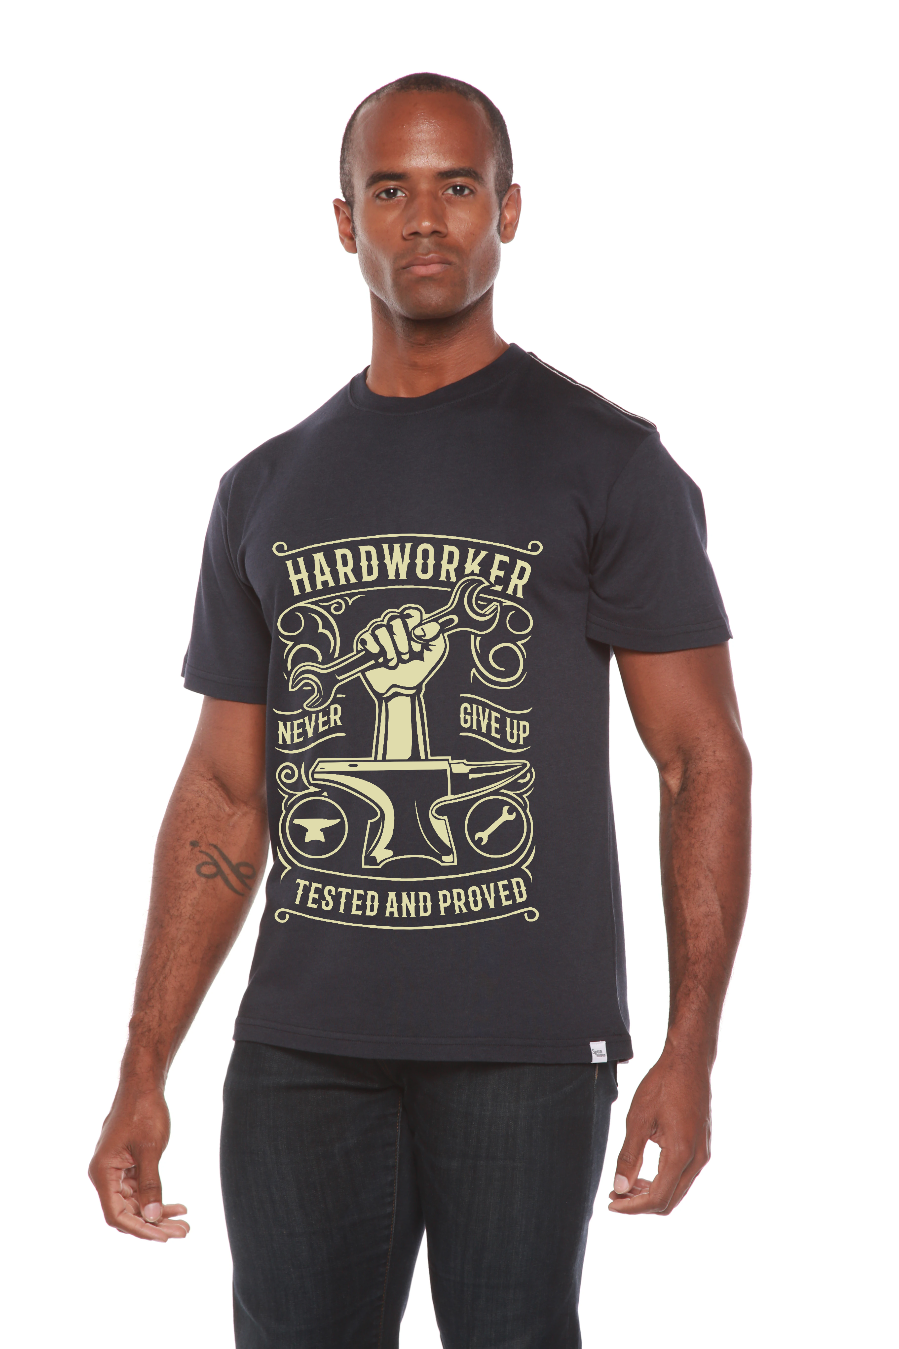 Hard Worker Men's Bamboo Viscose/Organic Cotton Short Sleeve T-Shirt - Spun Bamboo